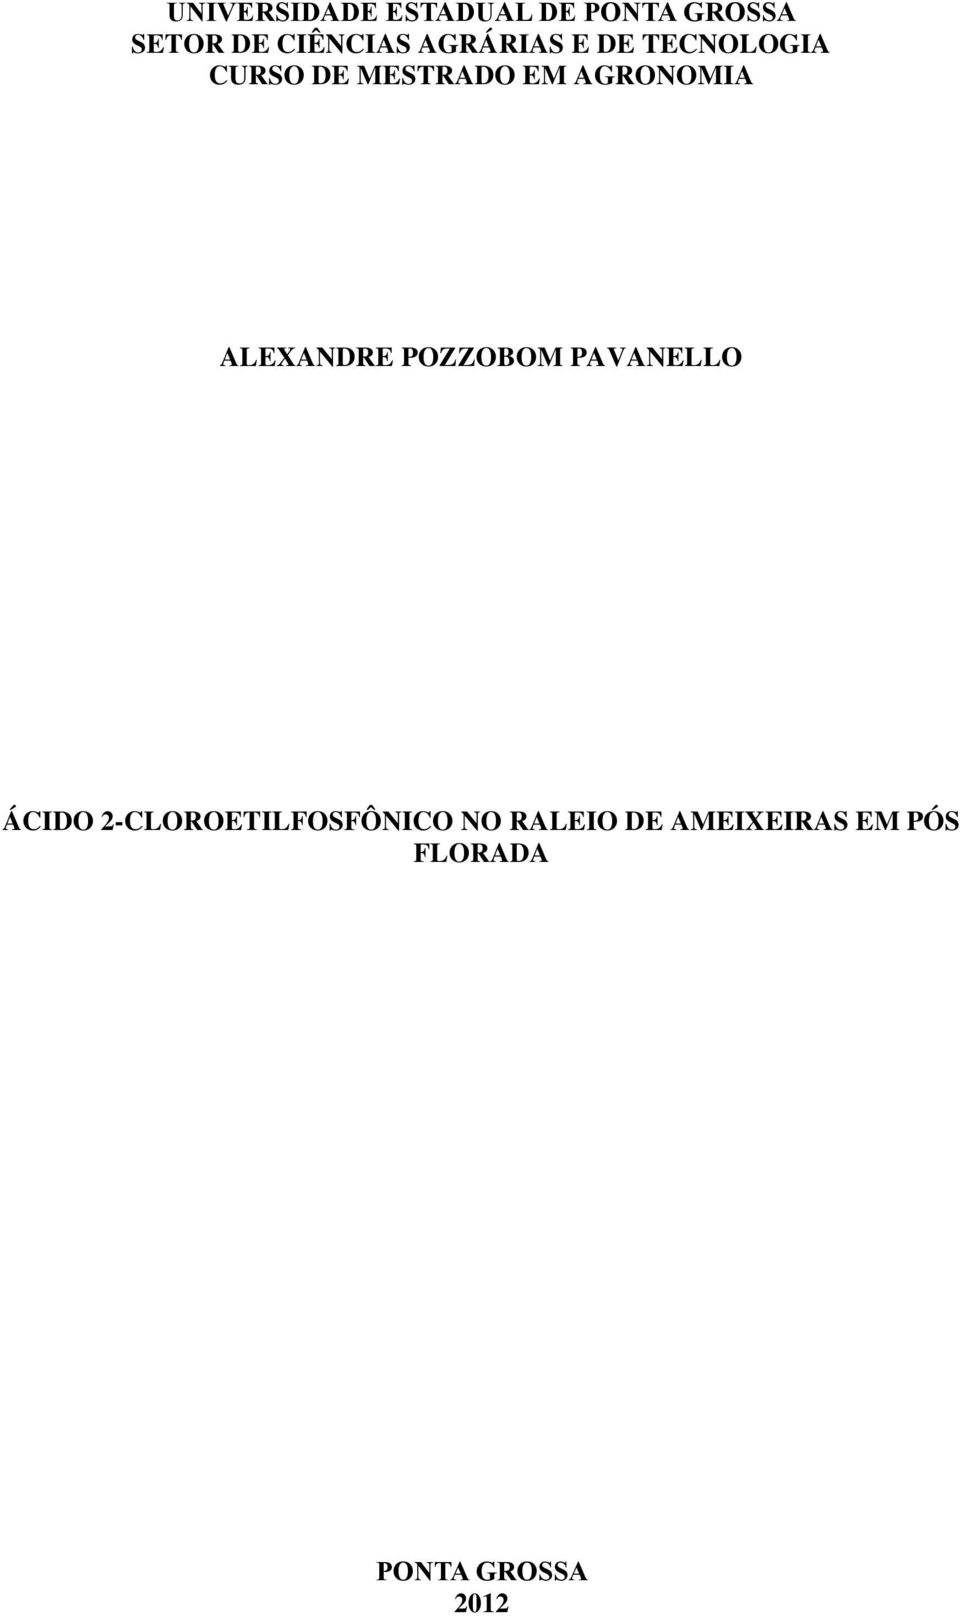 ALEXANDRE POZZOBOM PAVANELLO ÁCIDO 2-CLOROETILFOSFÔNICO